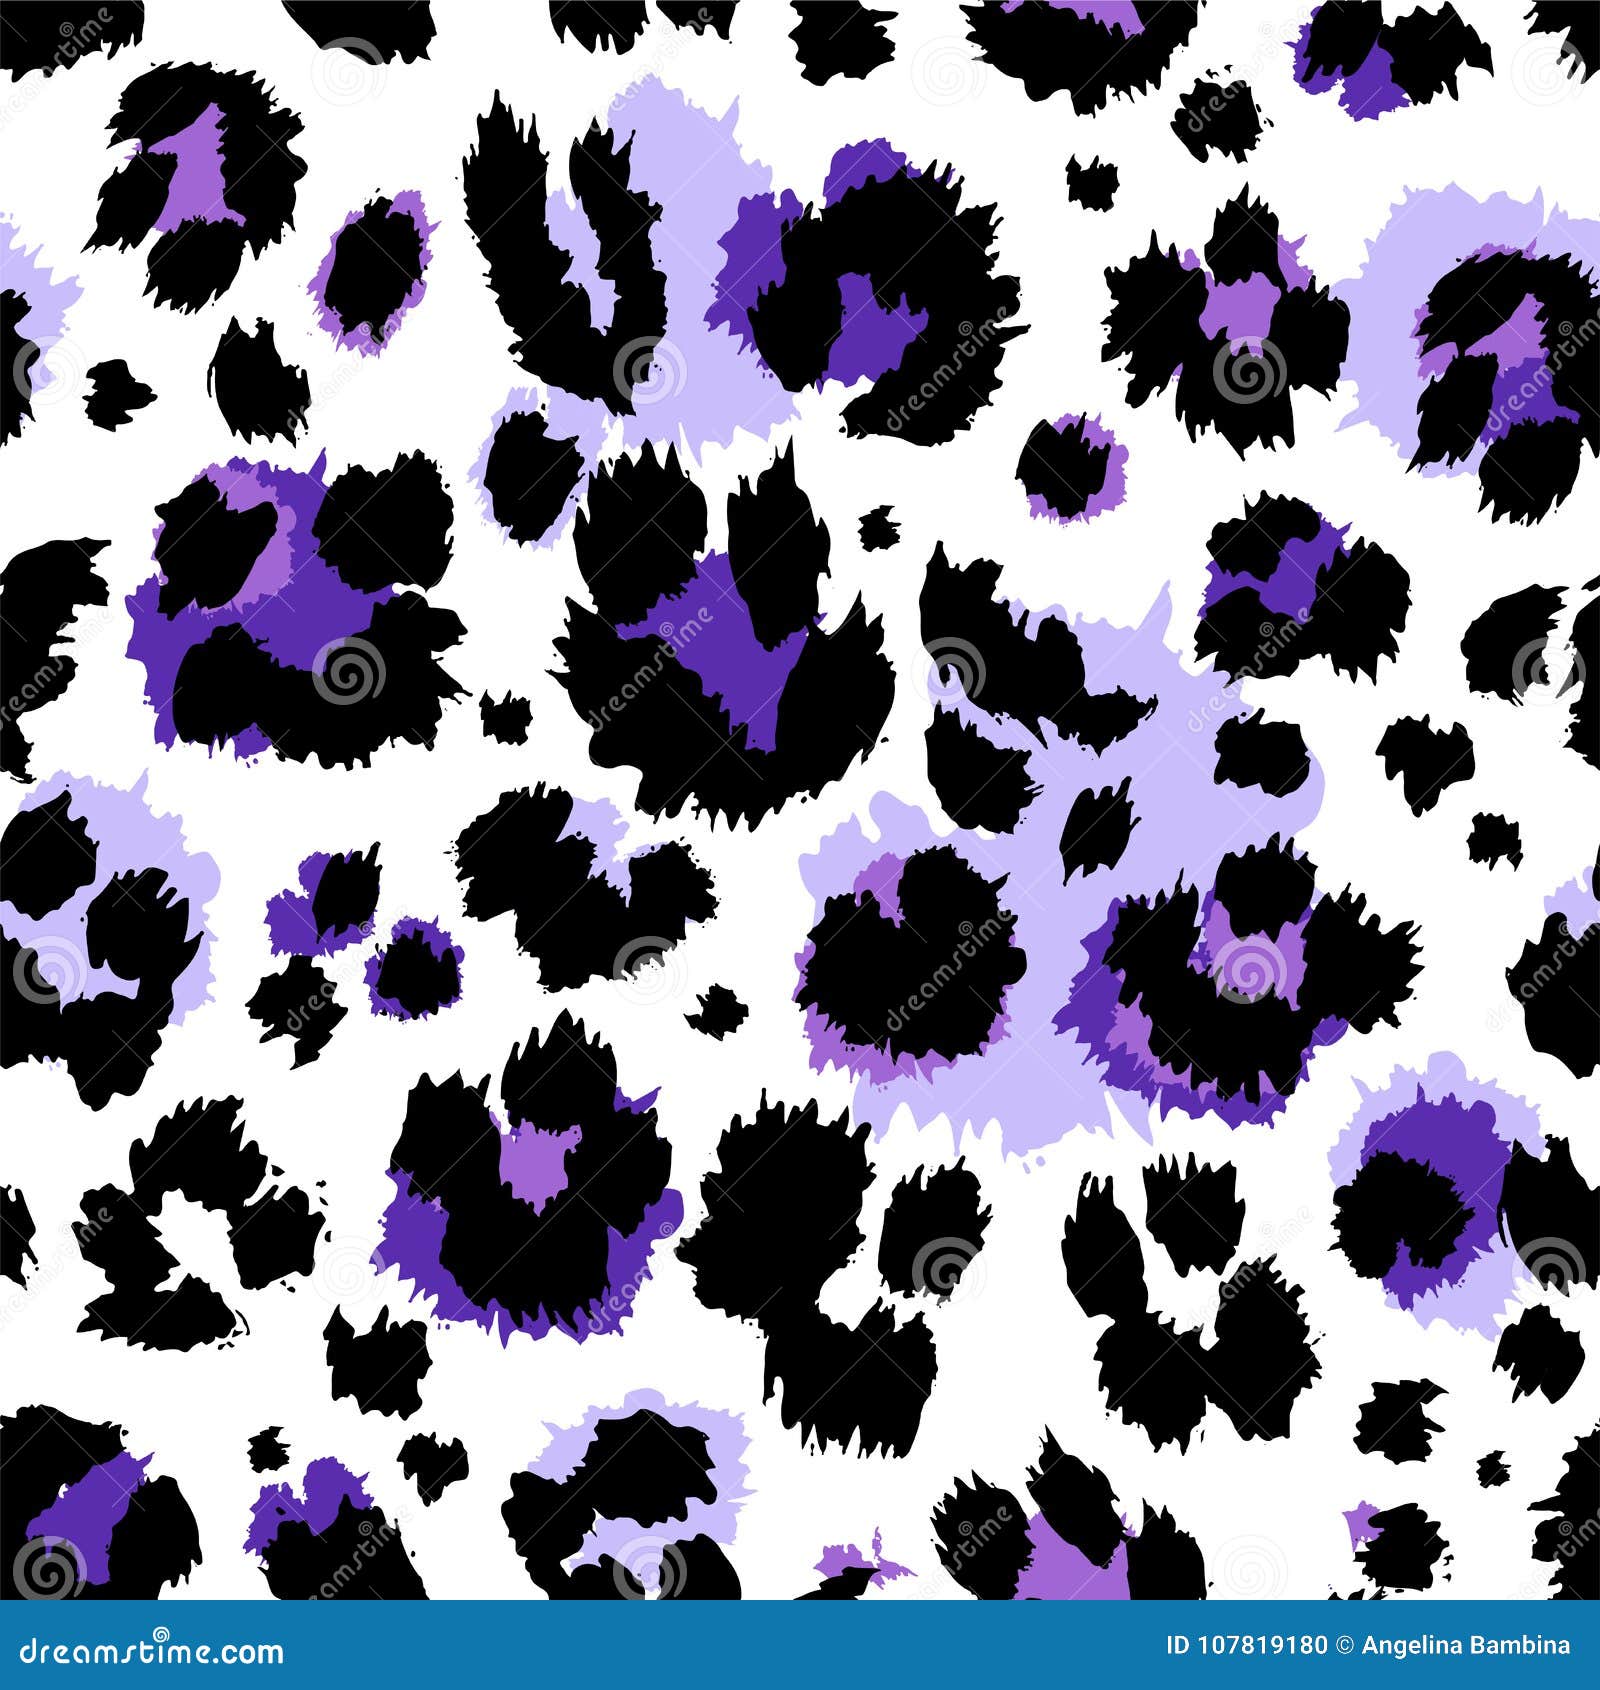 Seamless Black Leopard Print. 10 Eps. Leopard Fabric Texture